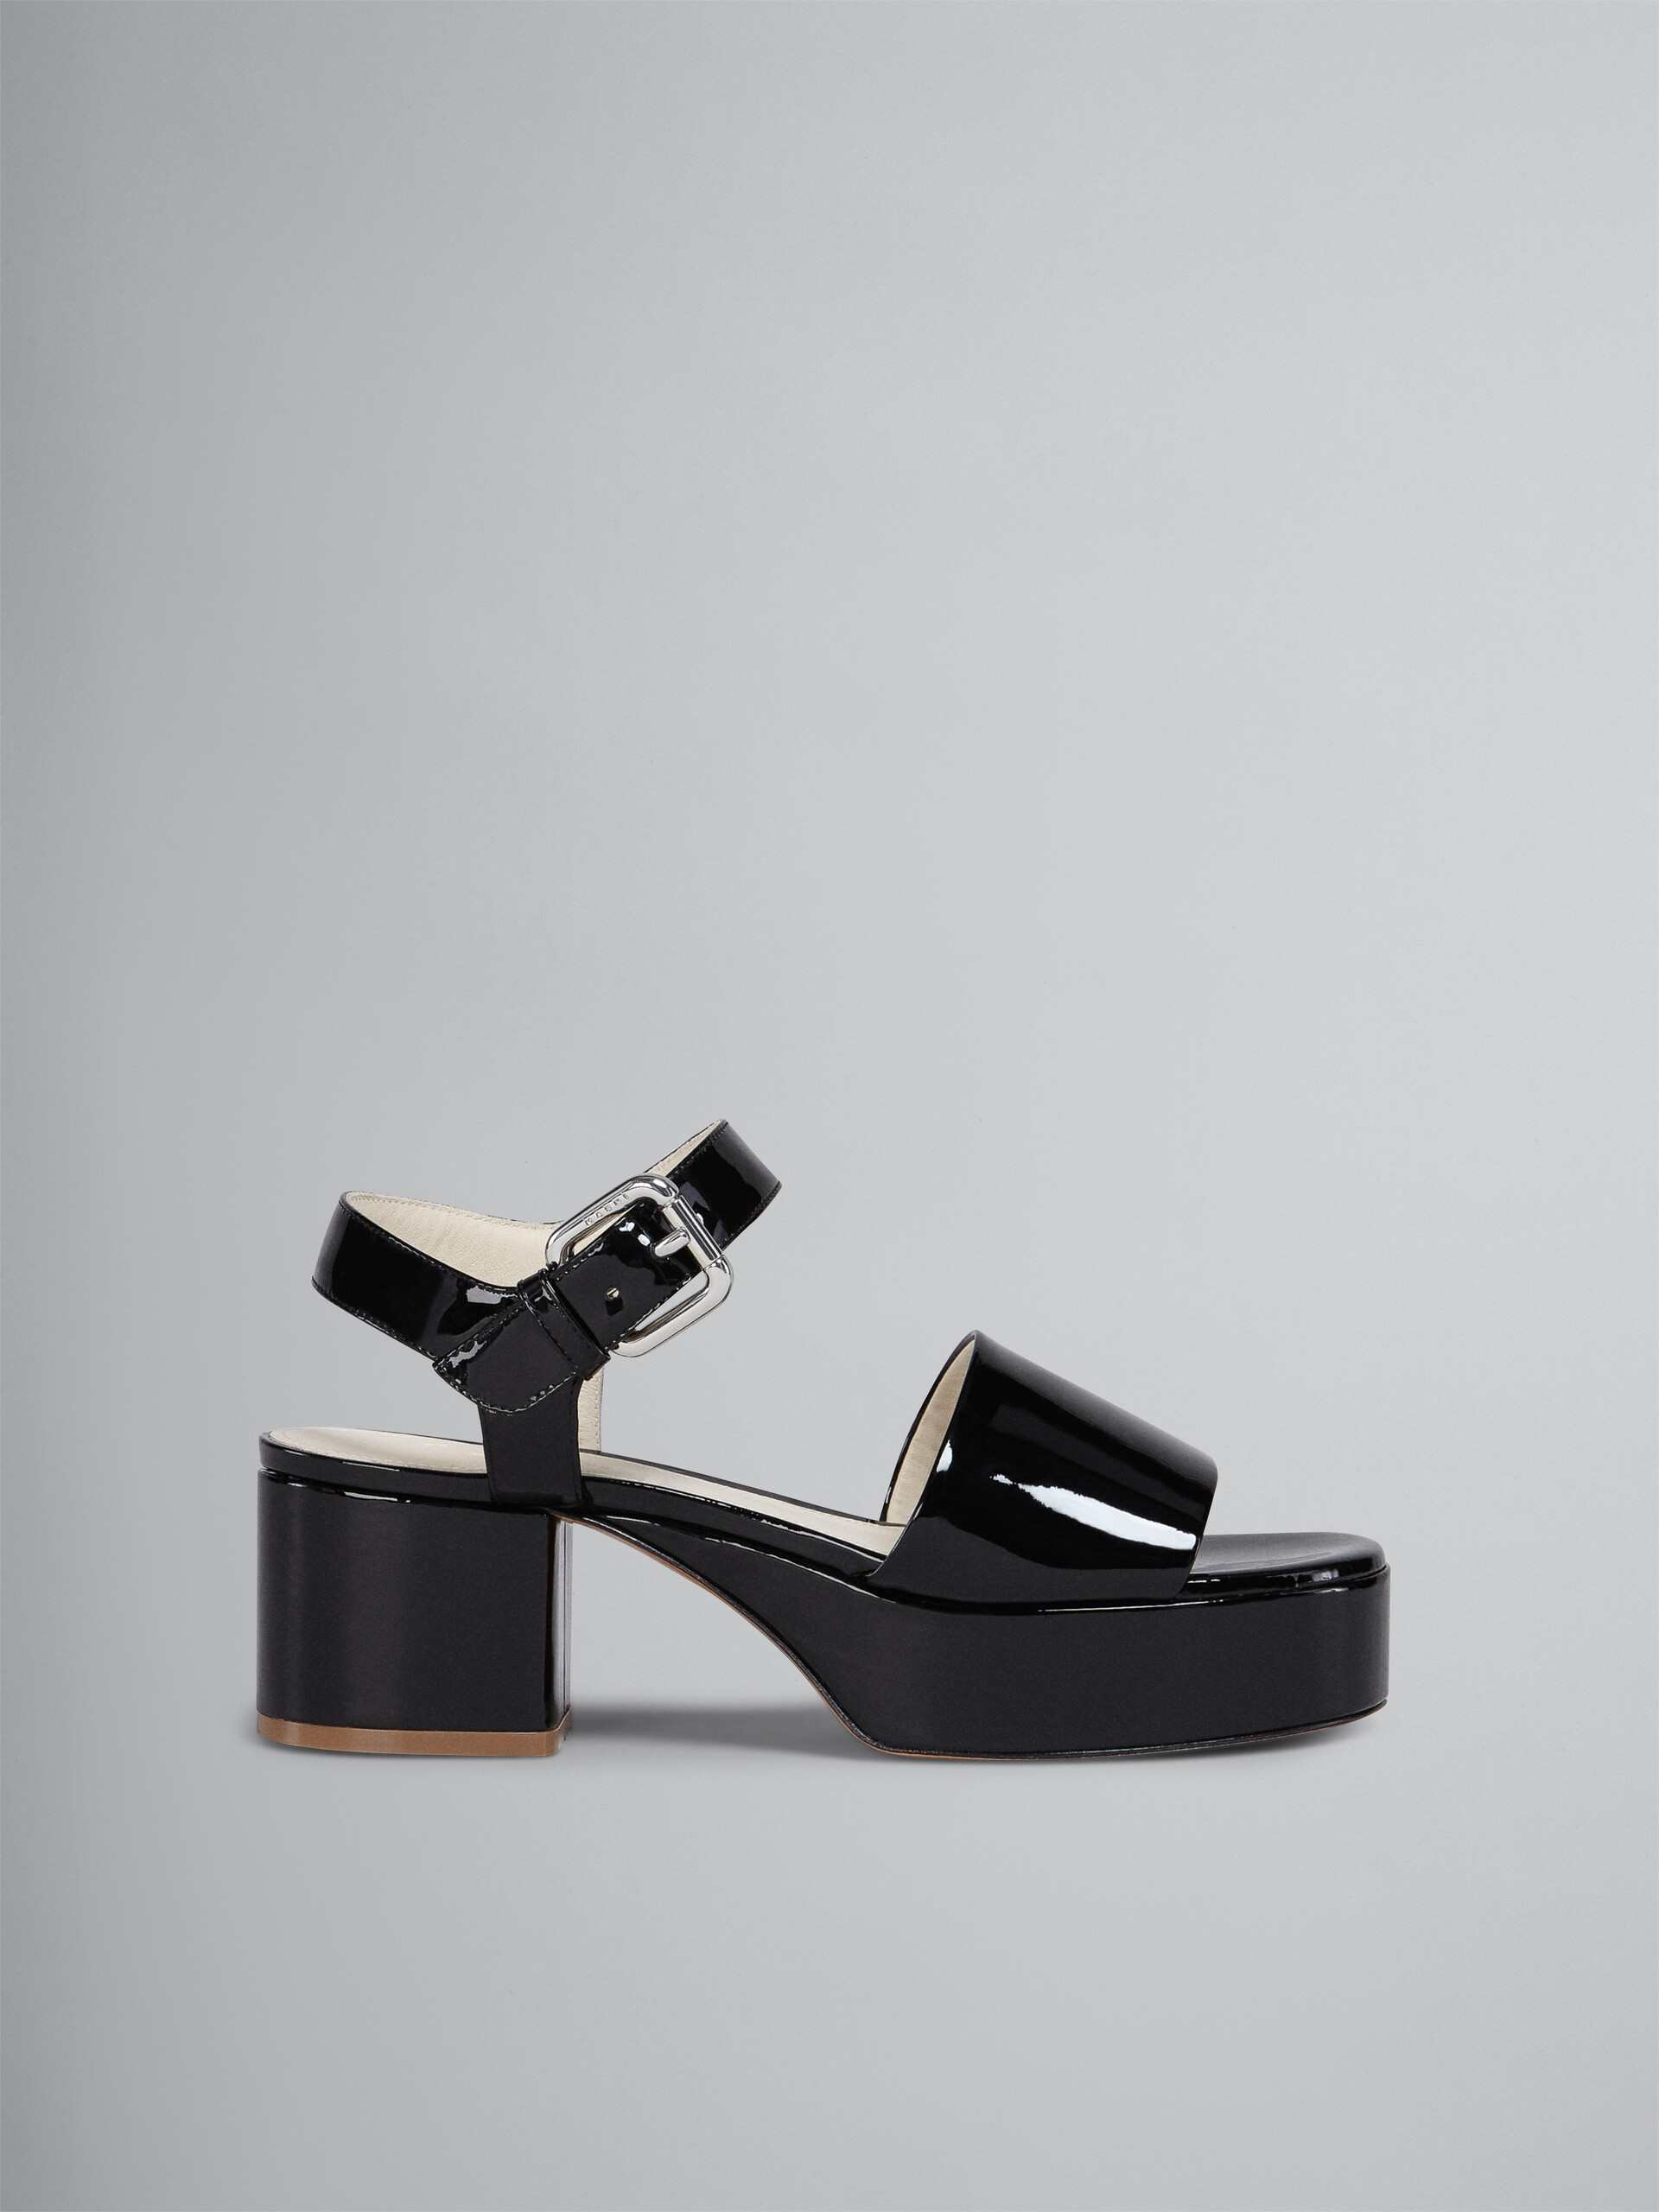 Black patent leather sandal - Sandals - Image 1